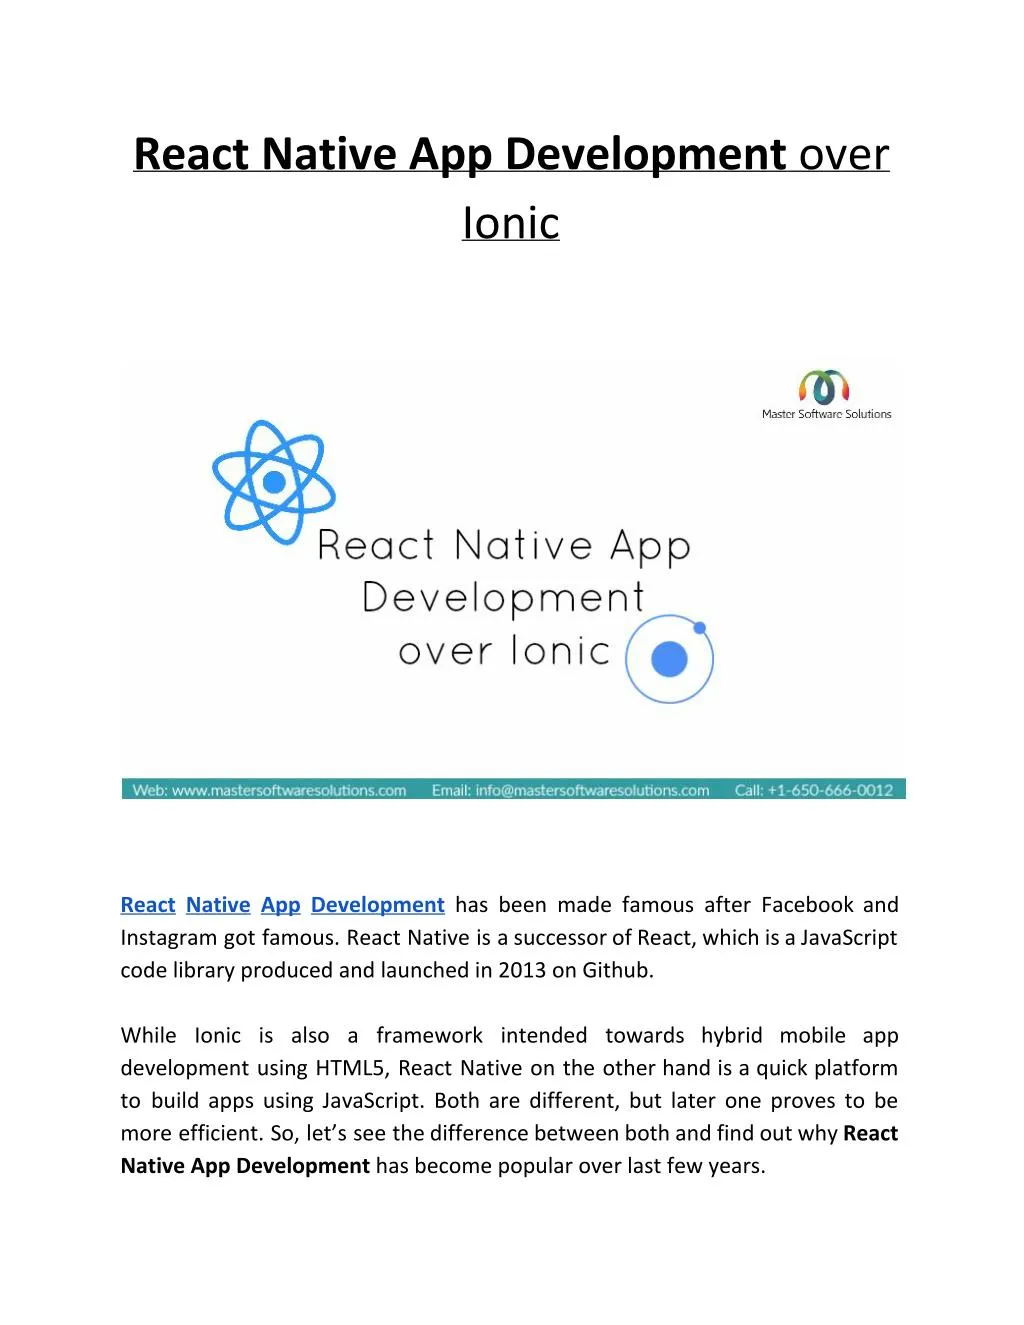 react native app development over ionic